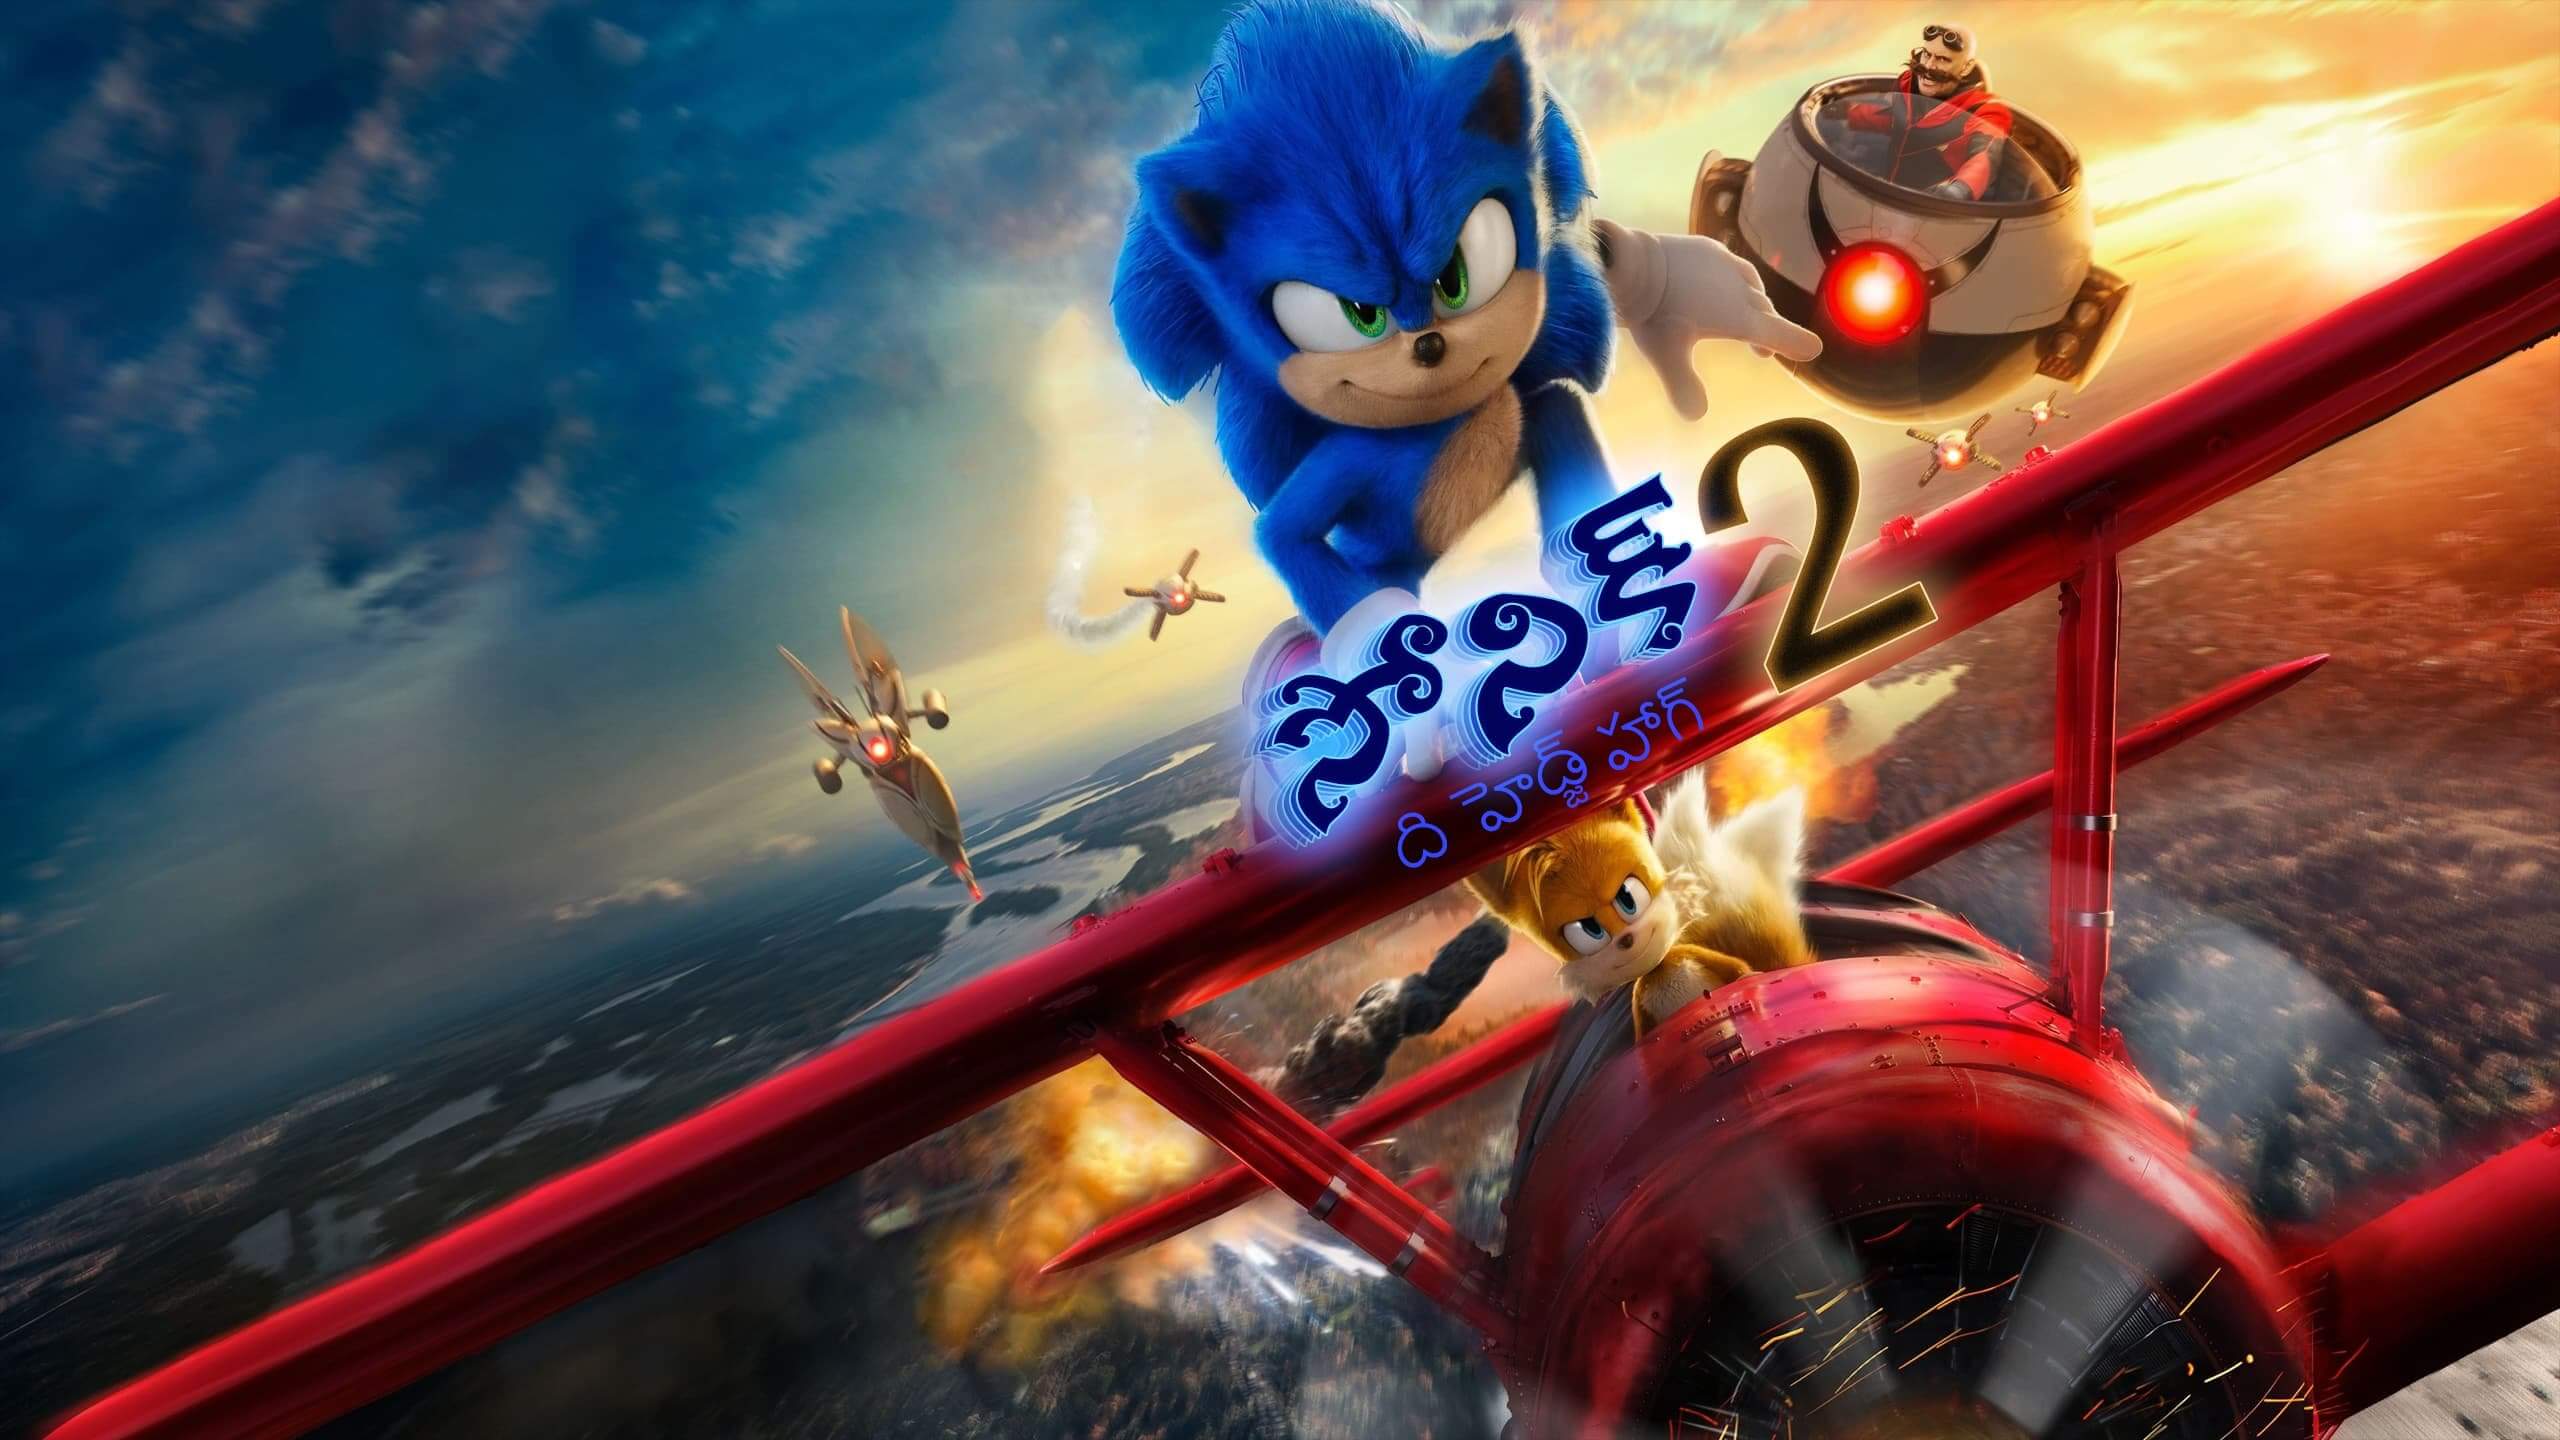 Sonic the Hedgehog 2 / సోనిక్ ది హెడ్జ్ హాగ్ 2 (2022) [Telugu Dubbed] »  Saicord - Telugu Dubbing Studio | Free watch online & download video